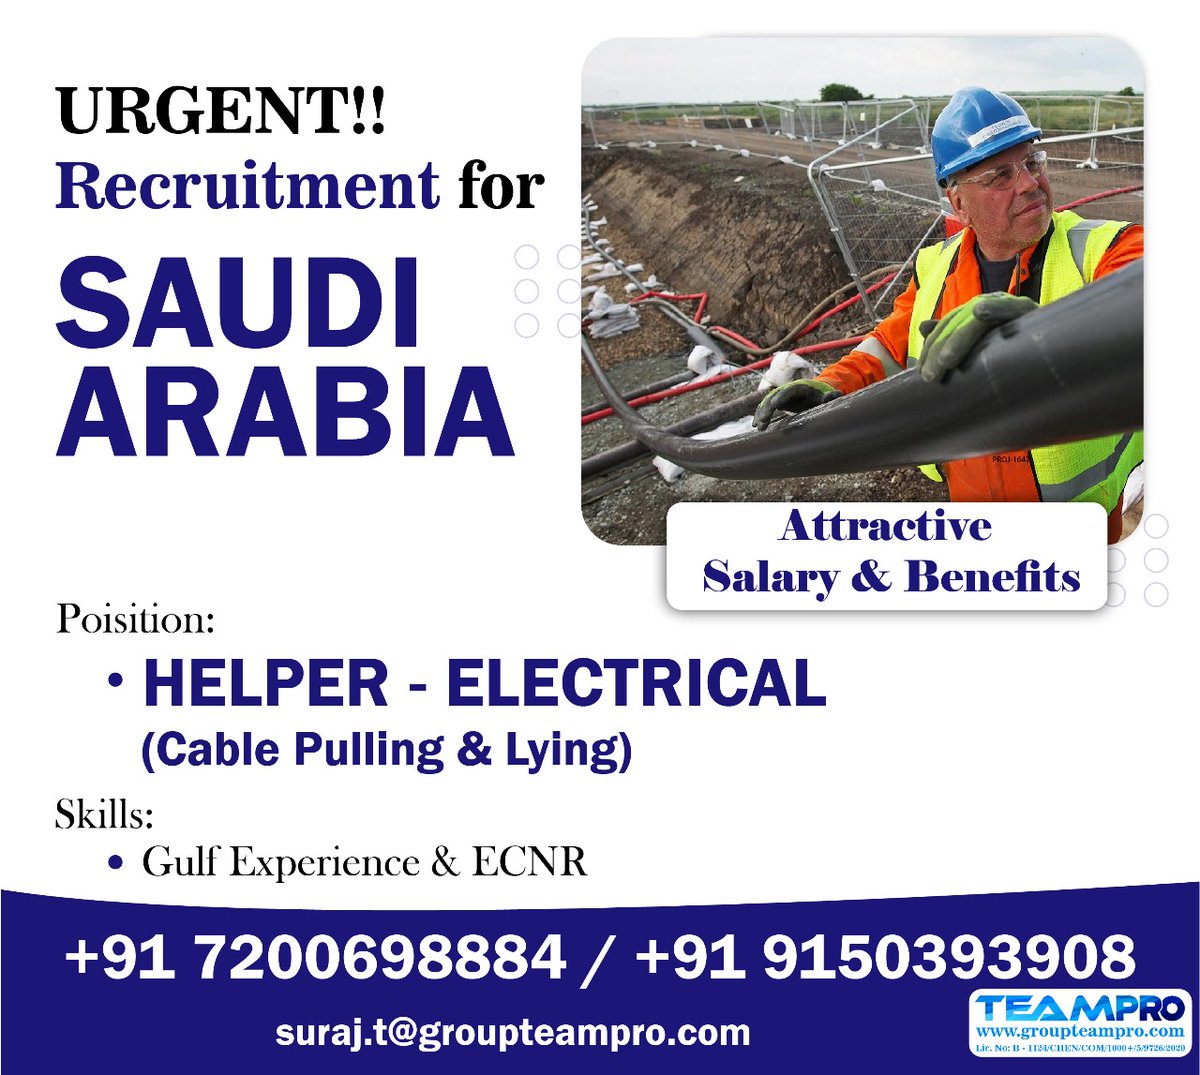 #urgentrecruitment #saudijobs #saudijobseekers #ksajobs #helper #electricalhelper #cablepulling #cablelying #immediatejoiners #shortlistingunderprogress